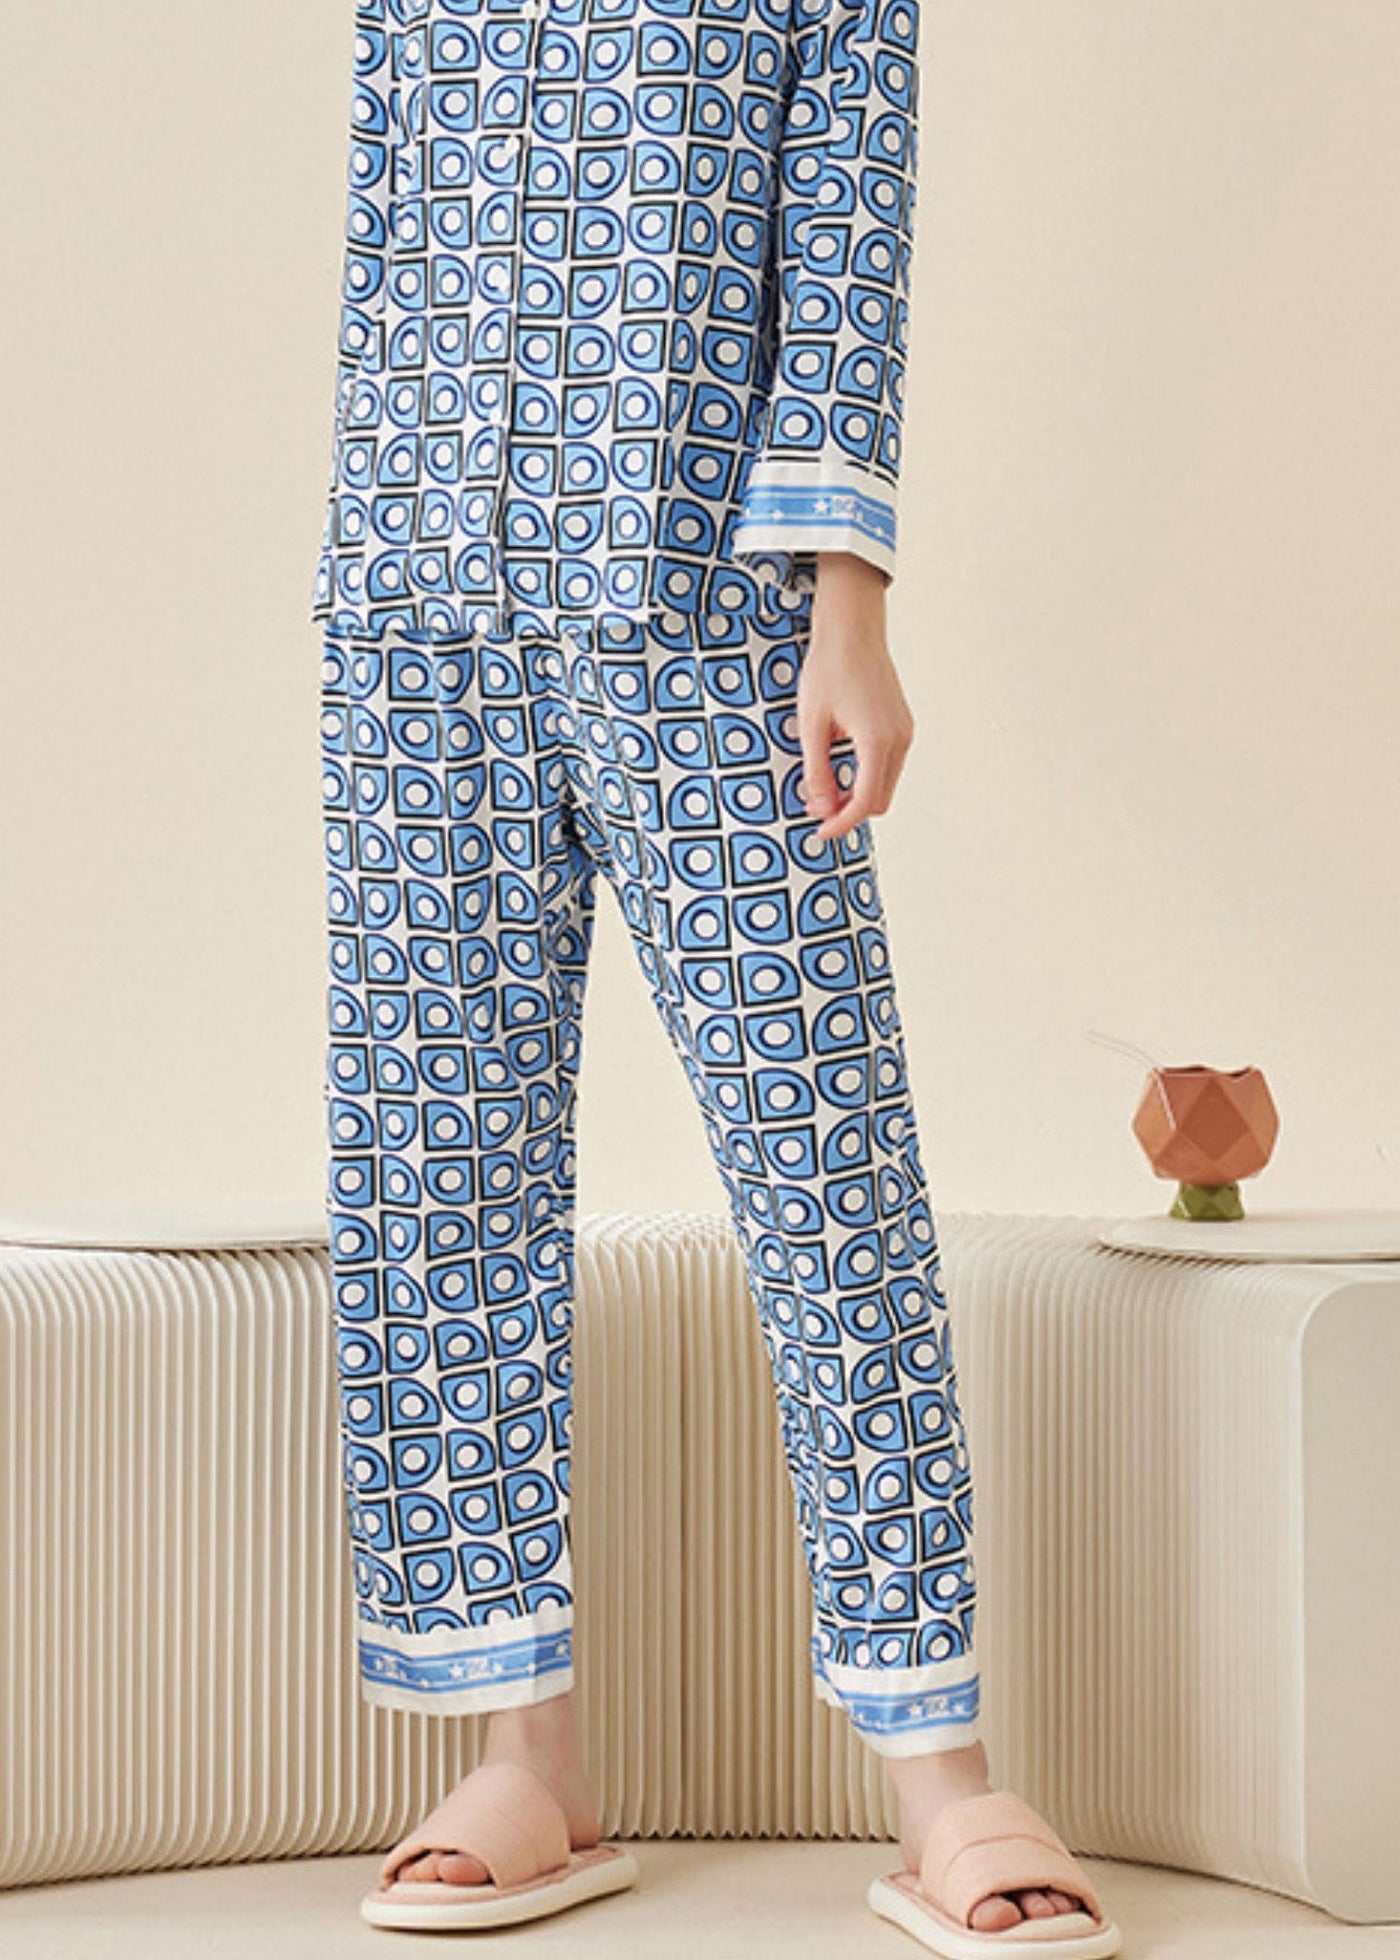 Modern Blue Peter Pan Collar Print Button Ice Silk Pajamas Two Pieces Set Long Sleeve